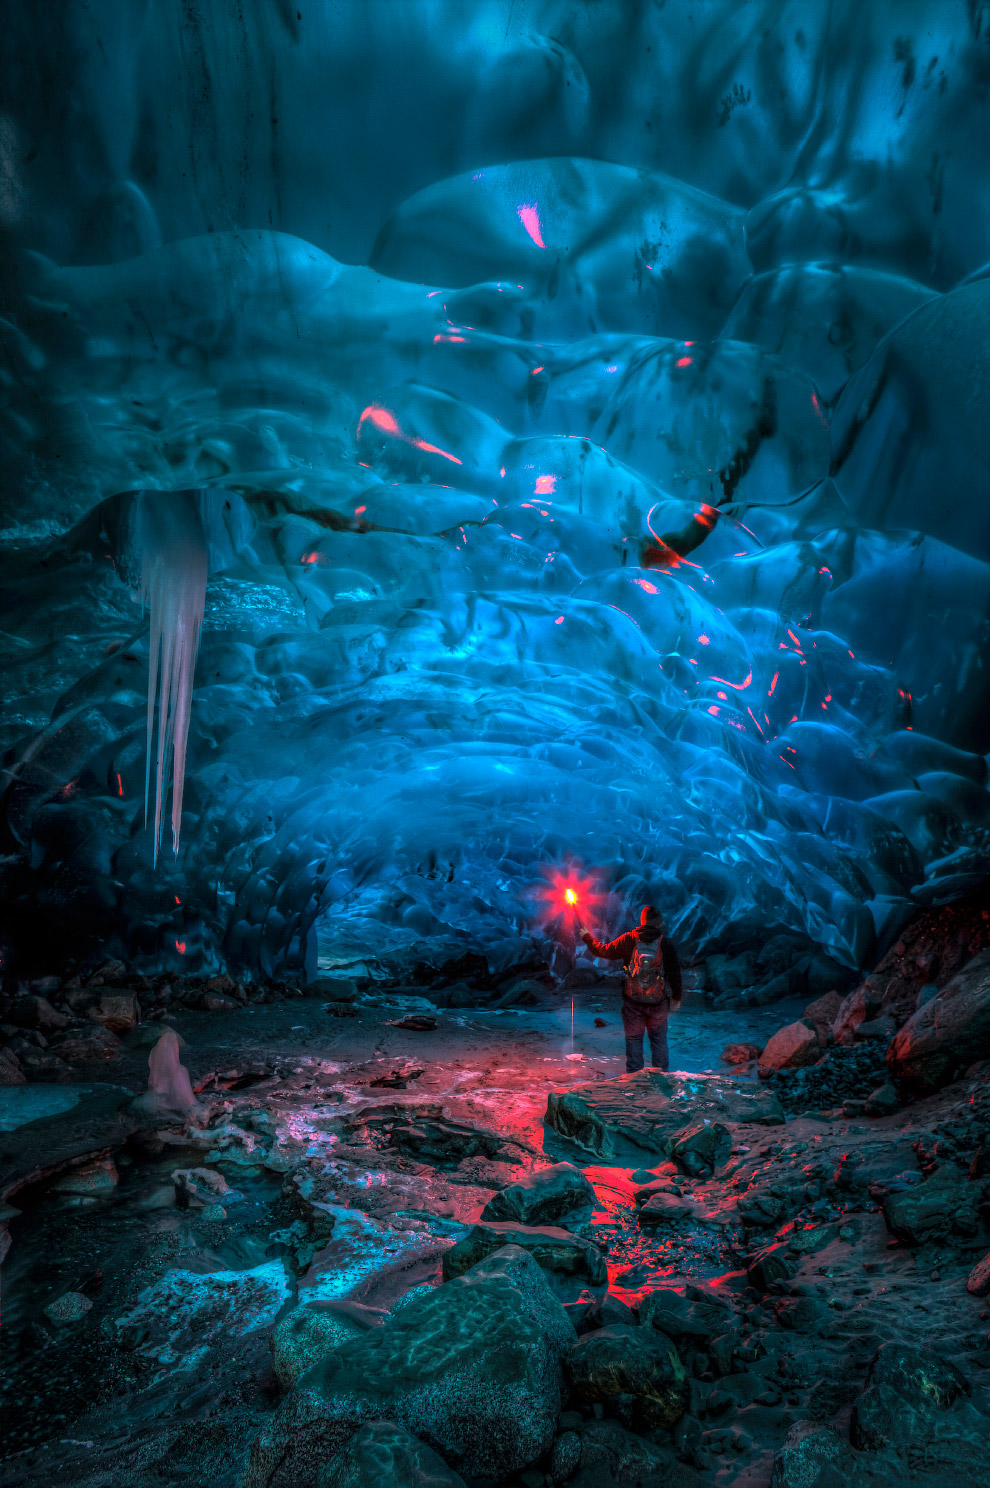 Incredible Alaskan ice cave